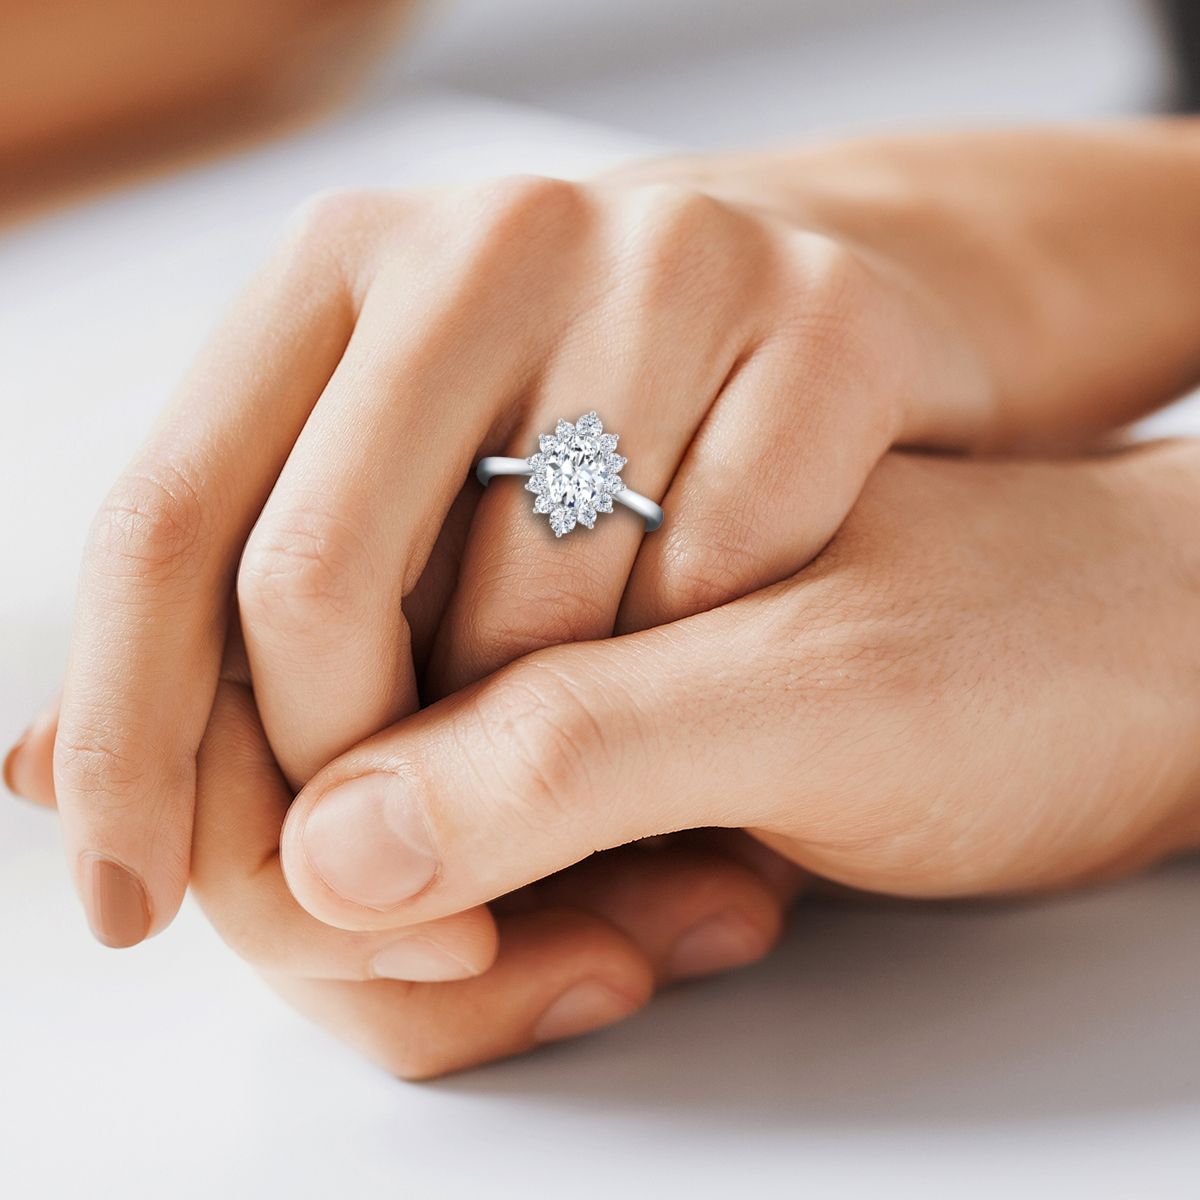 Platinum Oval Emerald Floral Diamond Halo Engagement Ring -1/2ctw